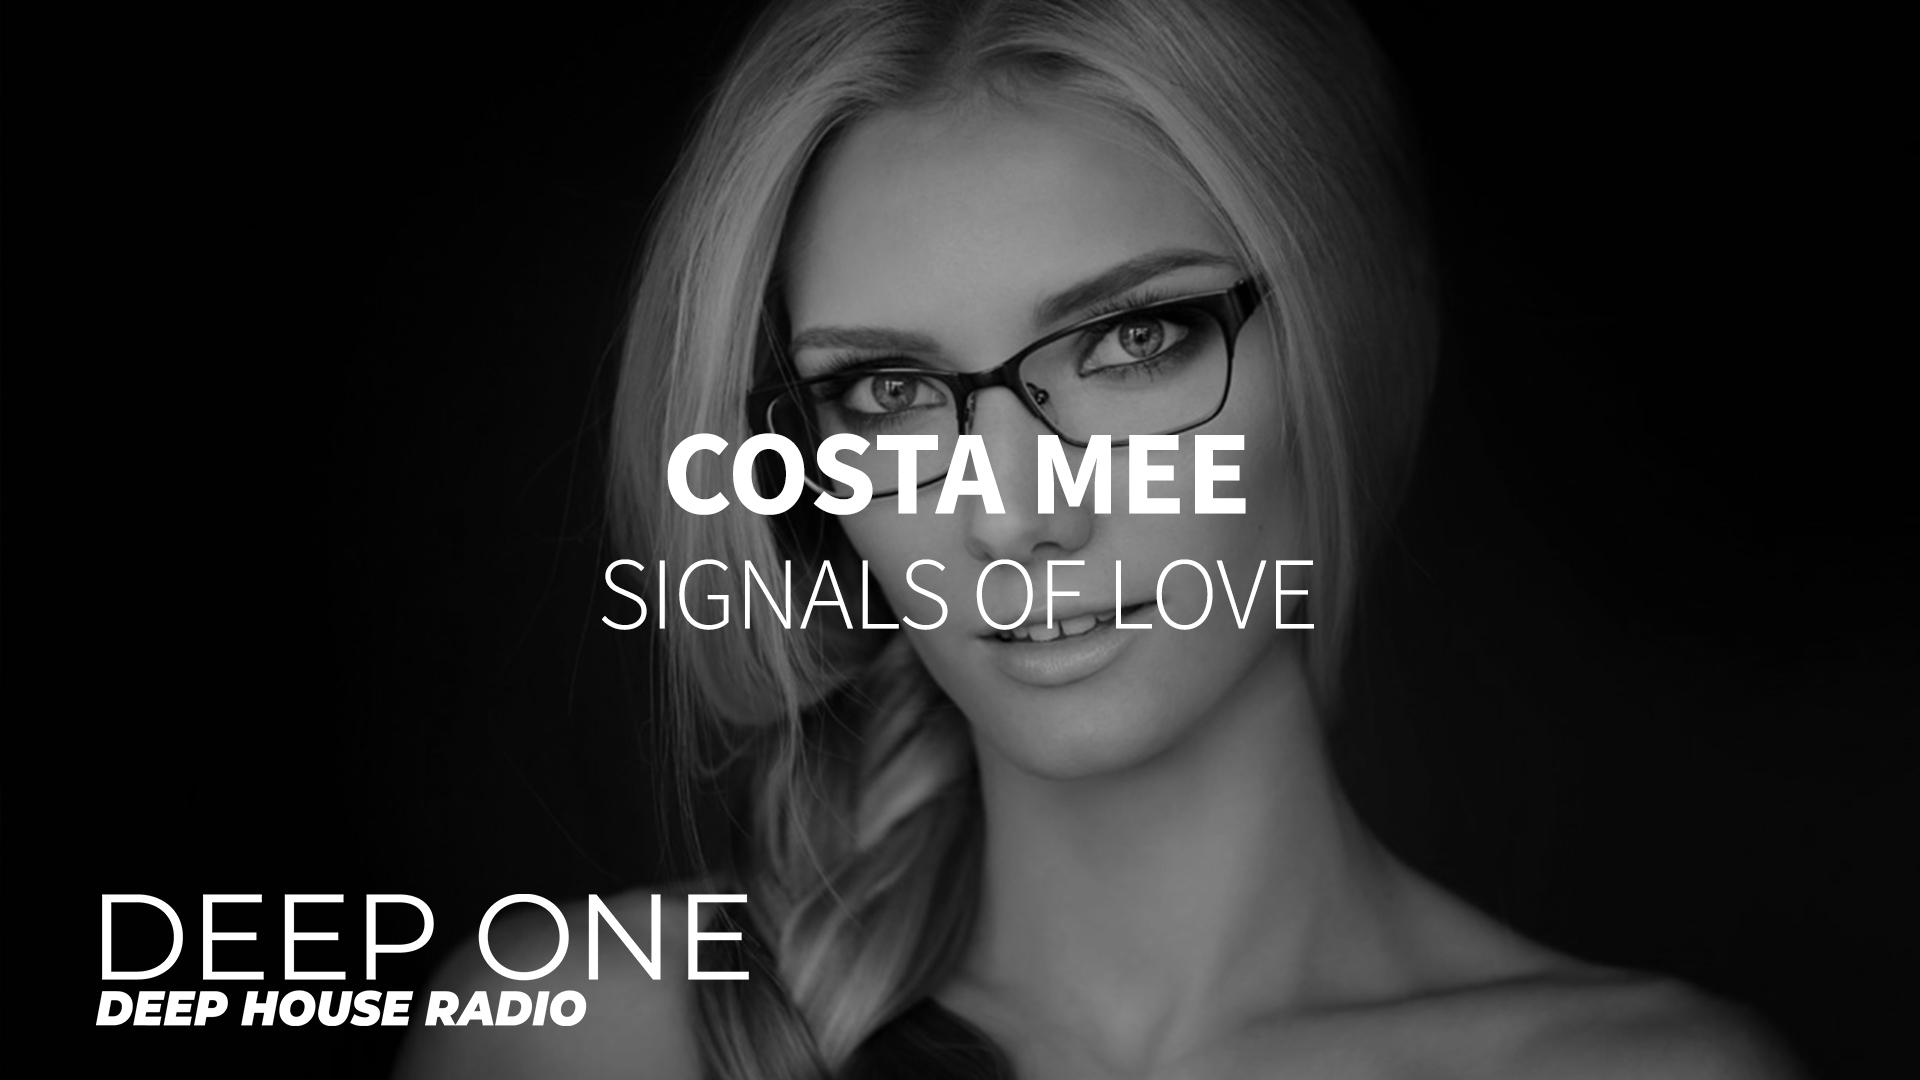 Costa mee feels. Costa mee исполнительница. Радио Deep one. "Costa mee" && ( исполнитель | группа | музыка | Music | Band | artist ) && (фото | photo). Costa mee loving you.